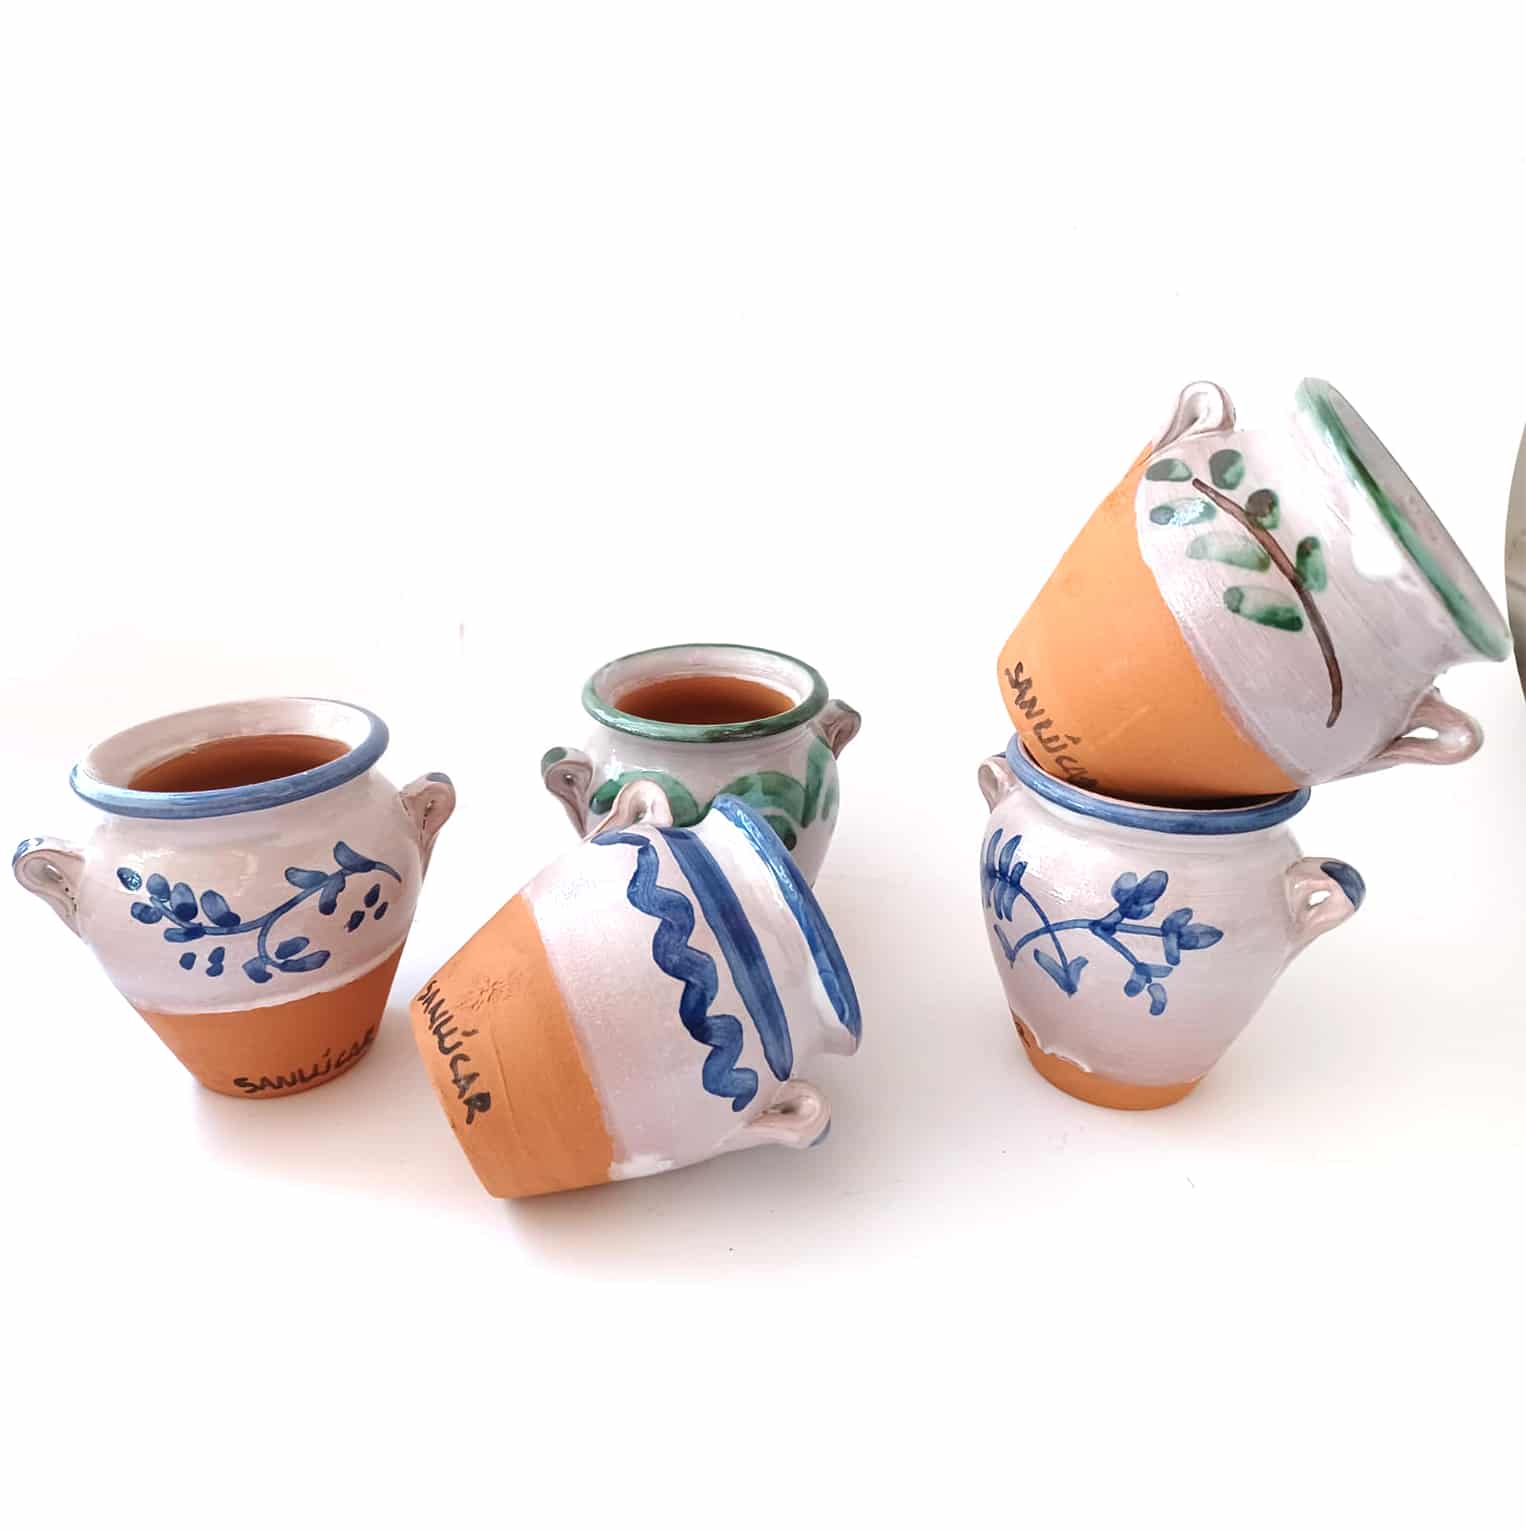 souvenir, recuerdos de cerámica, cerámica tradicional, recuerdos de Sanlúcar, recuerdos de Andalucía, regalos personalizados